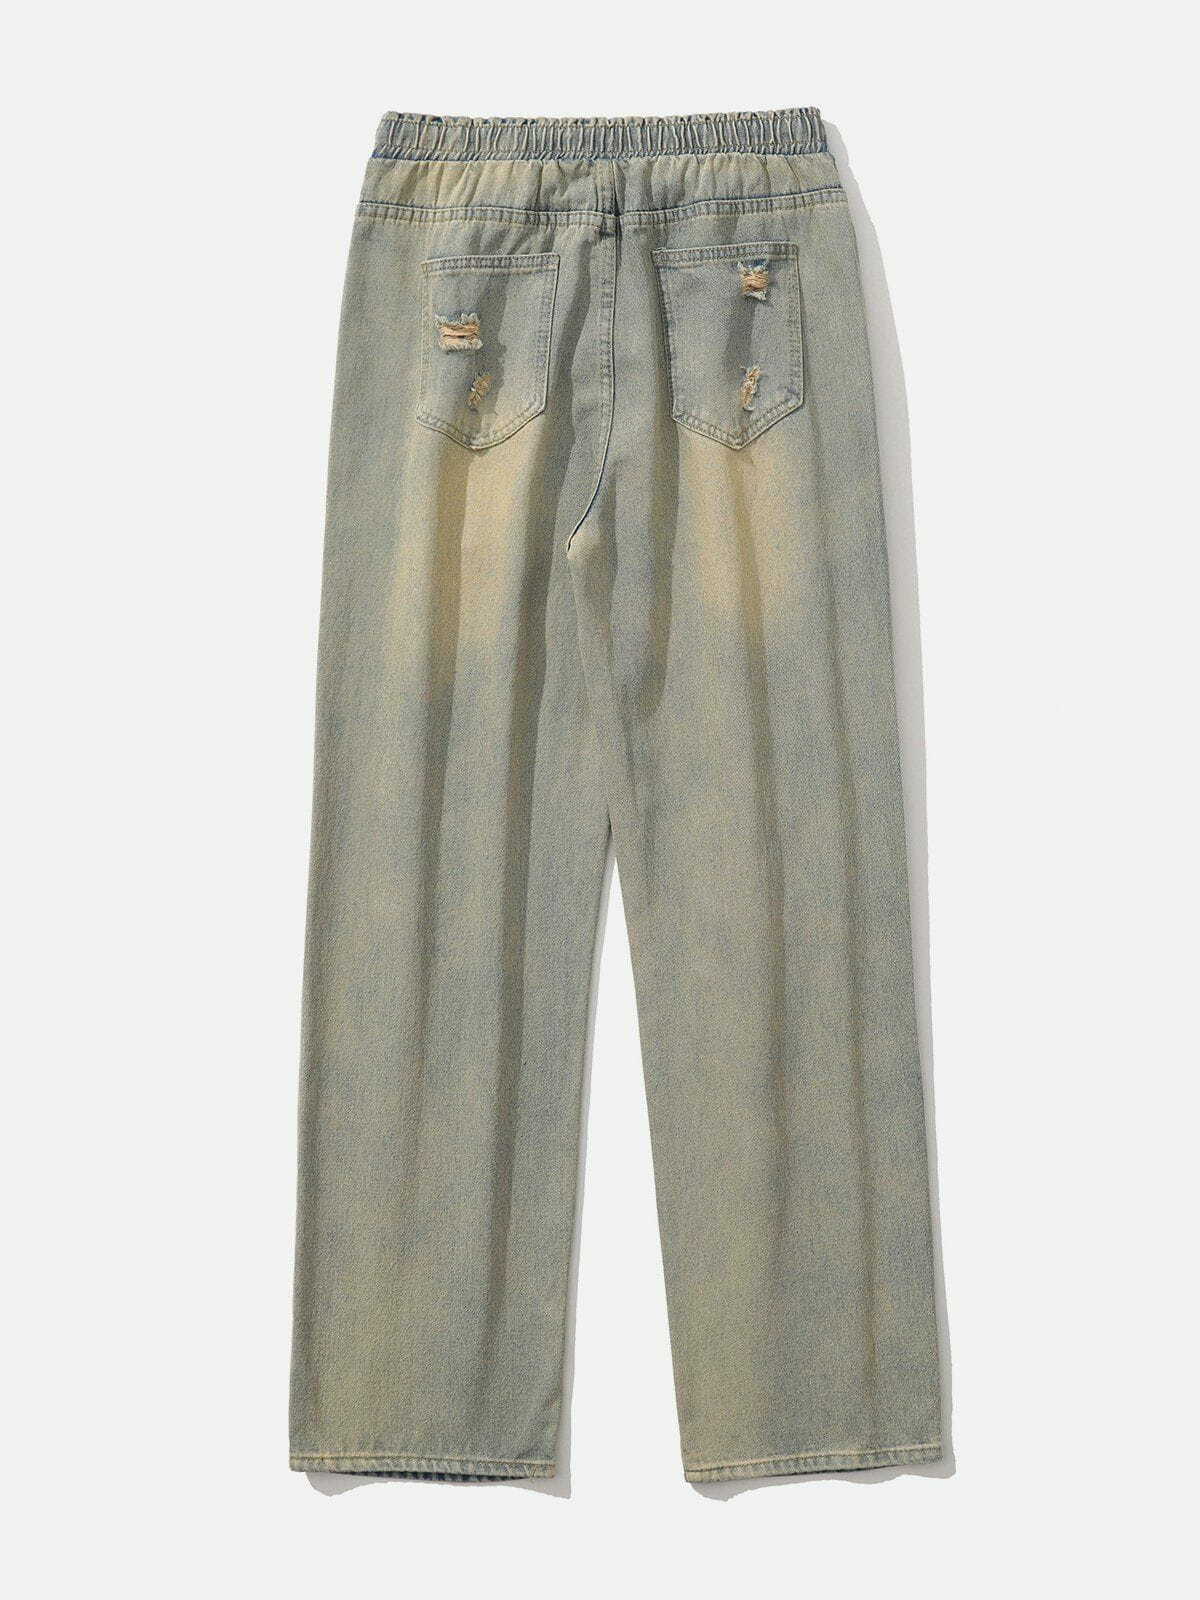 drawstring denim streetwear jeans edgy & retro urban fashion 8184